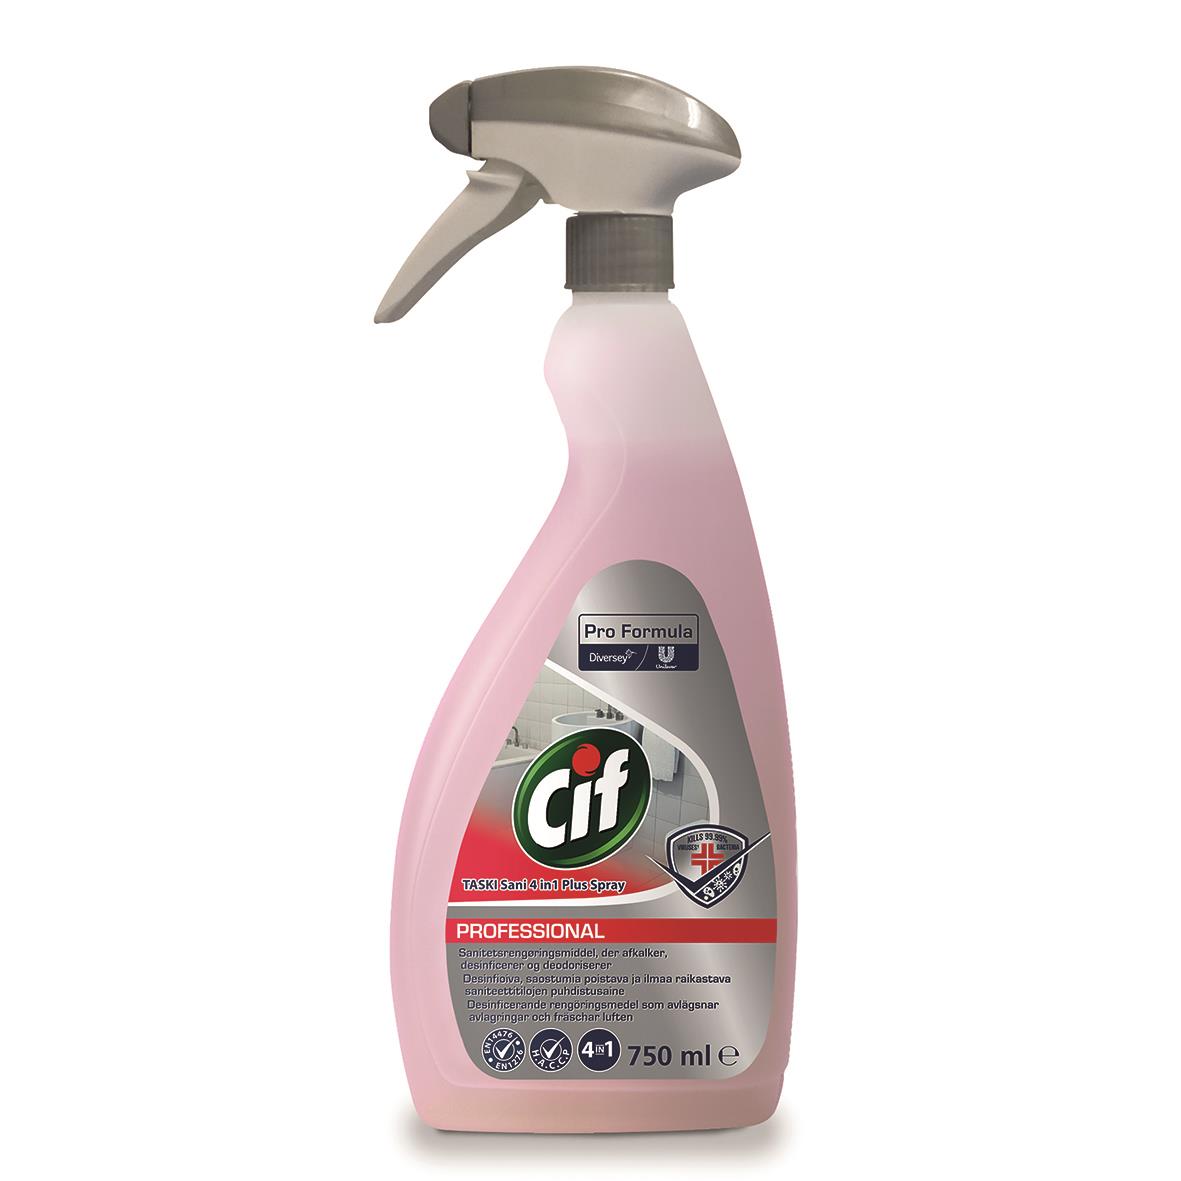 Sanitetsrent Cif Professional 4in1 Badrum Spray 750ml 52070243